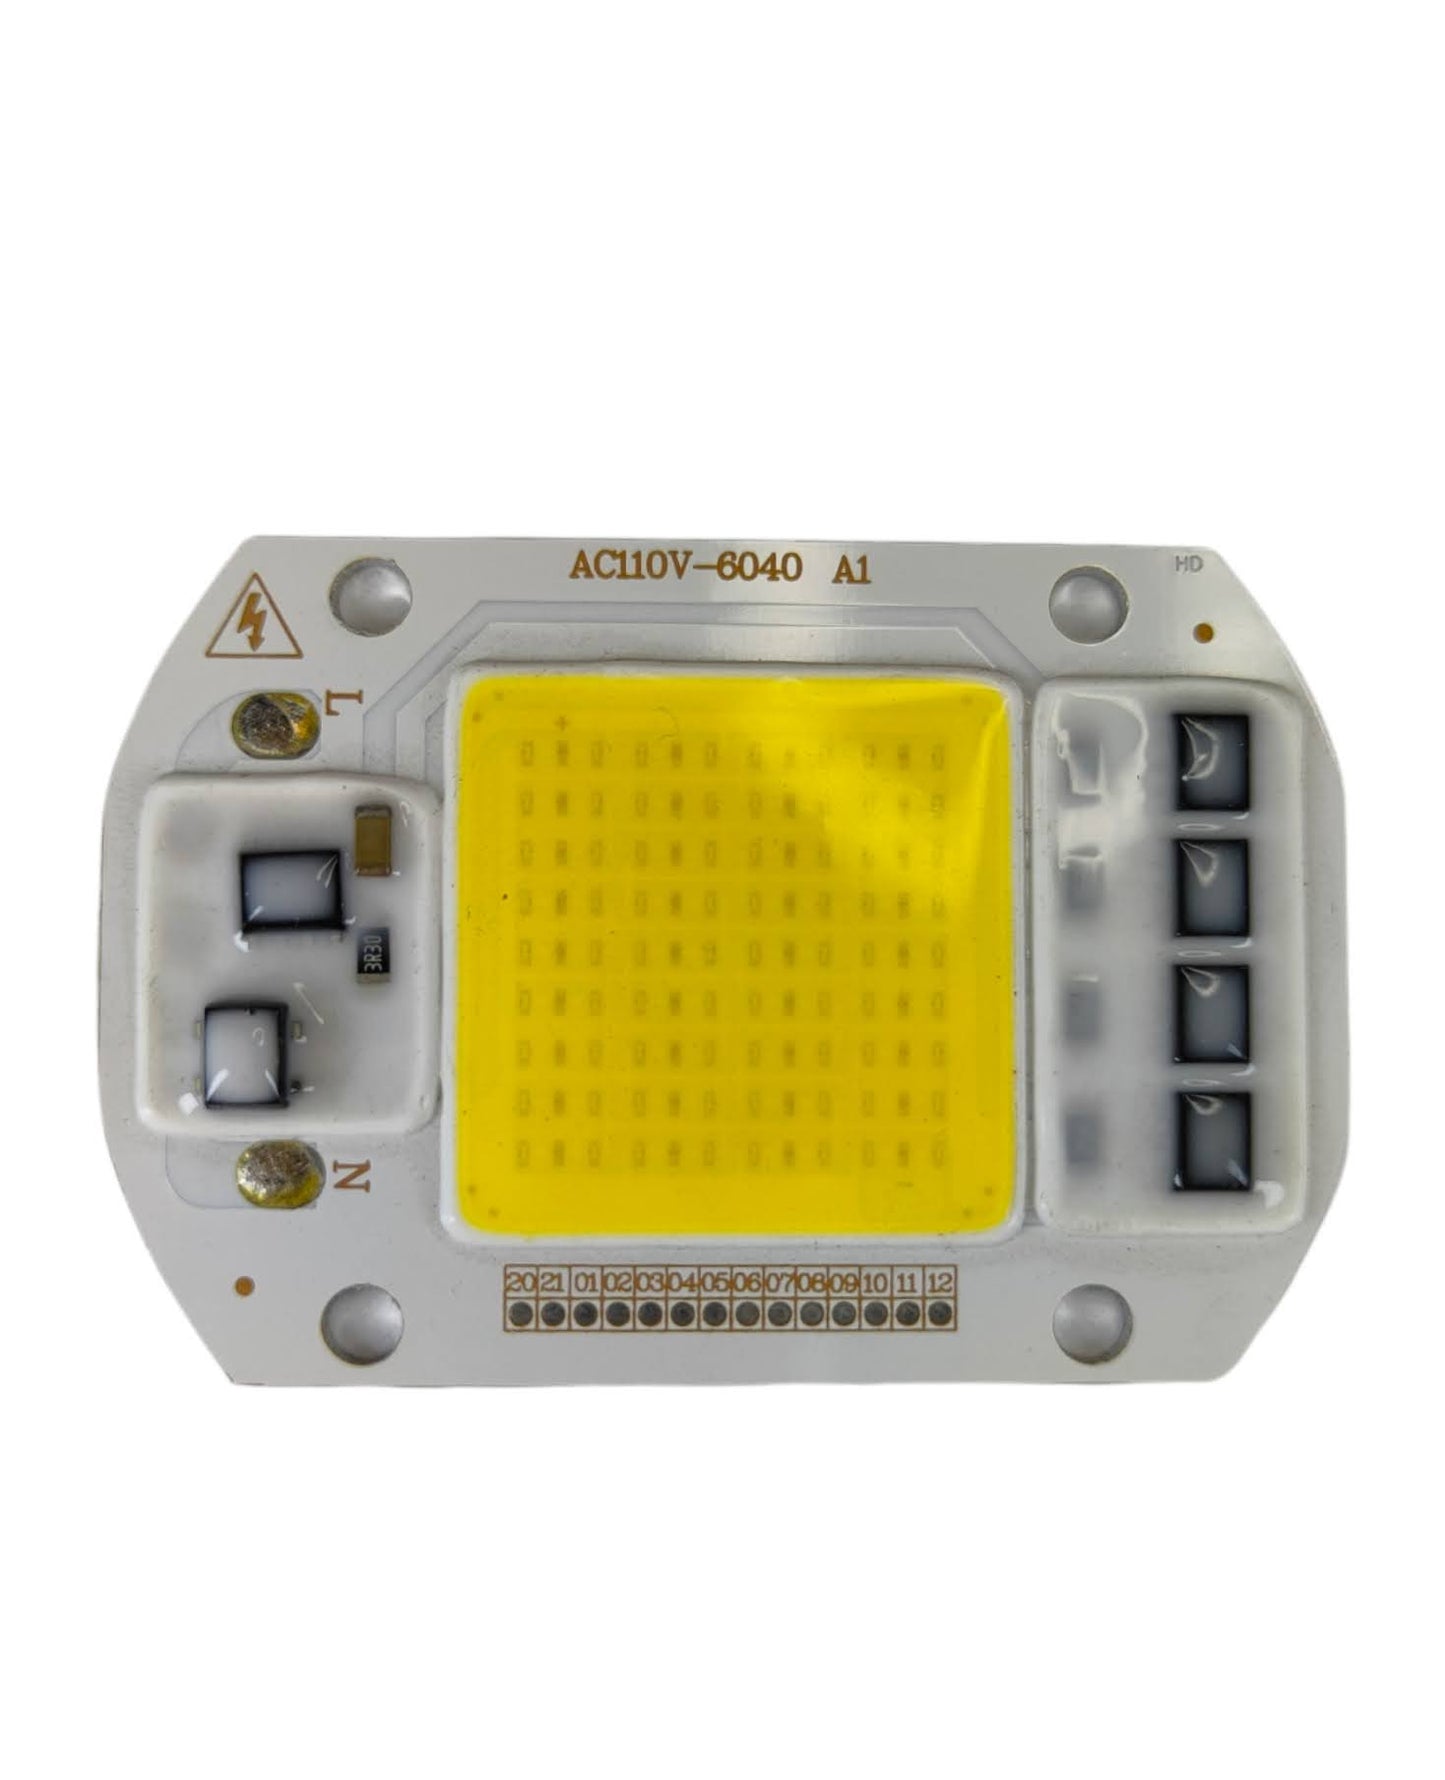 Chip LED de potencia 50 watts | 110 V AC | Pastilla LED Repuesto de reflector